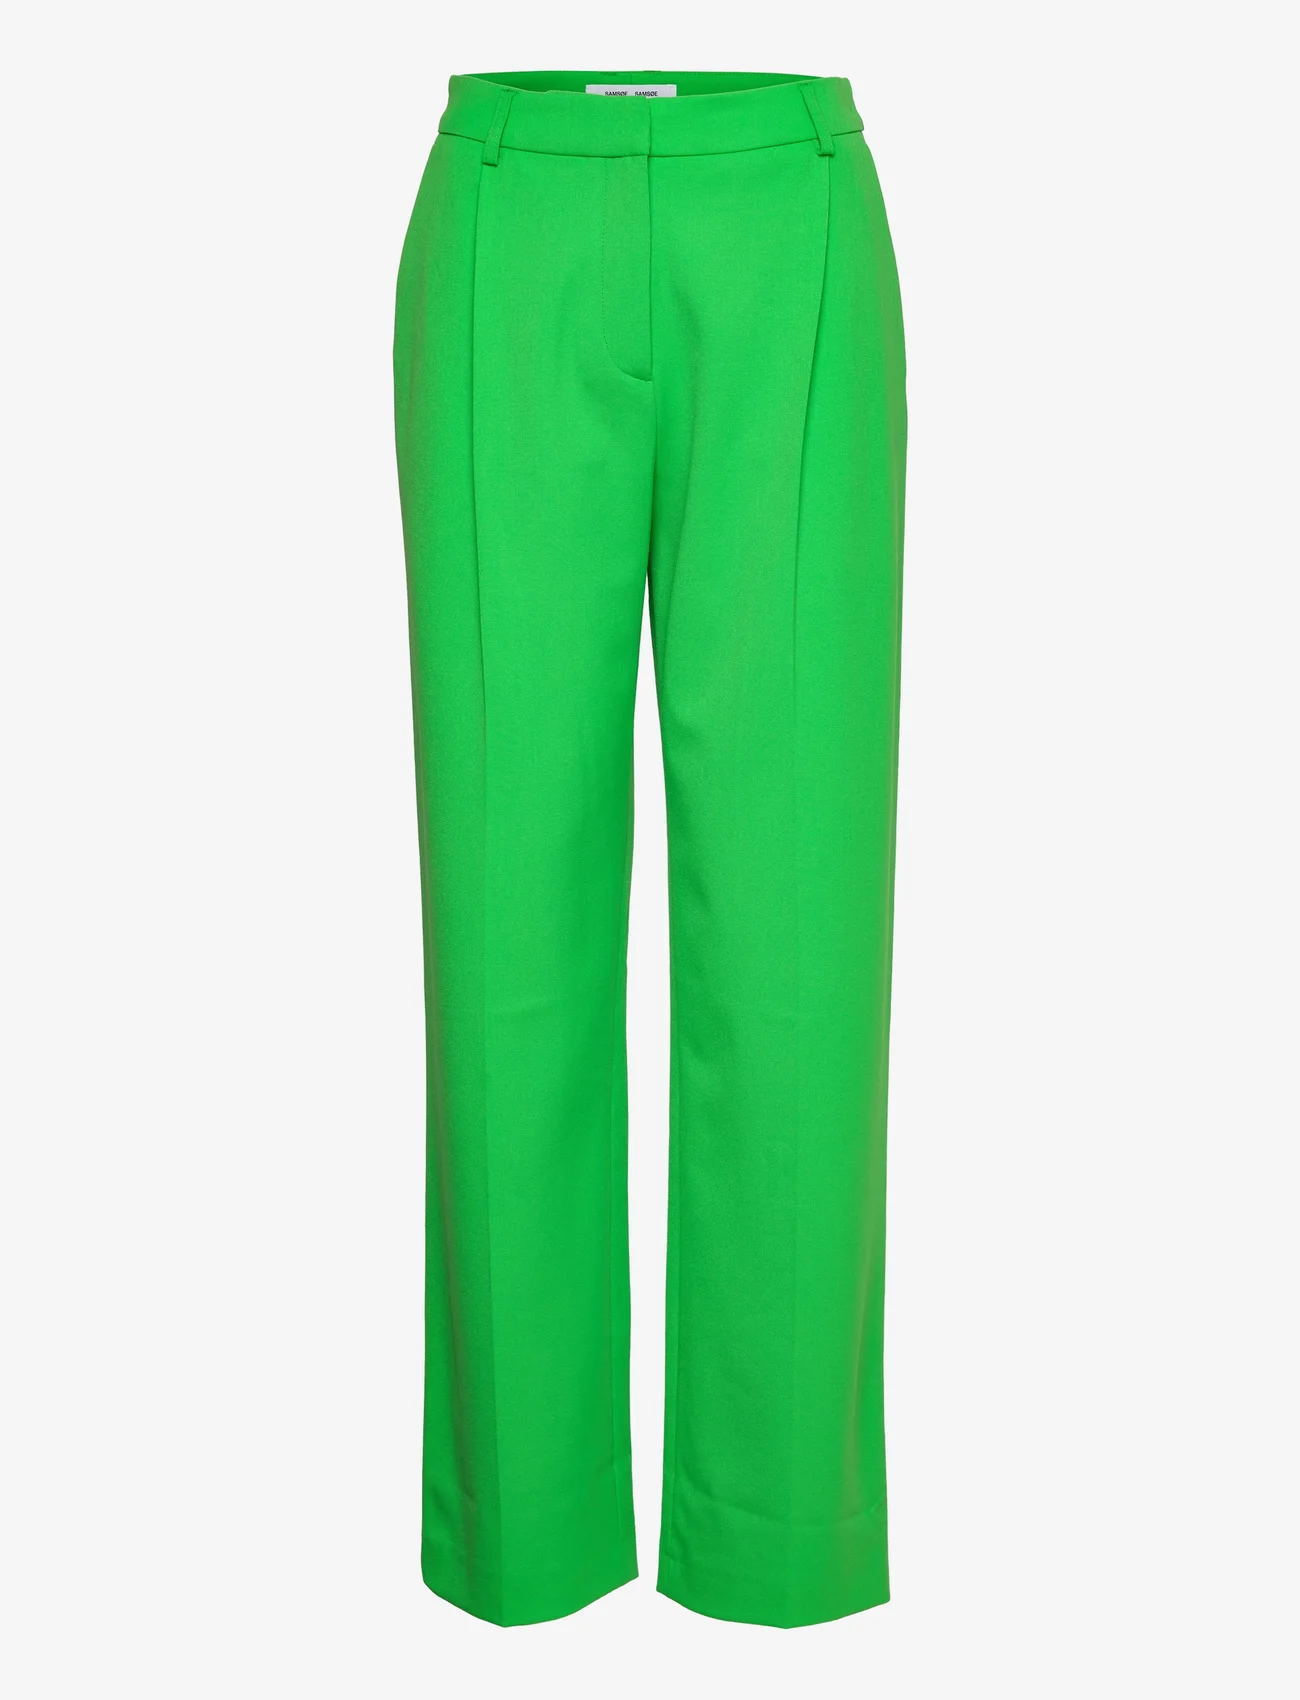 Samsøe Samsøe - Paola trousers 13103 - puvunhousut - vibrant green - 0